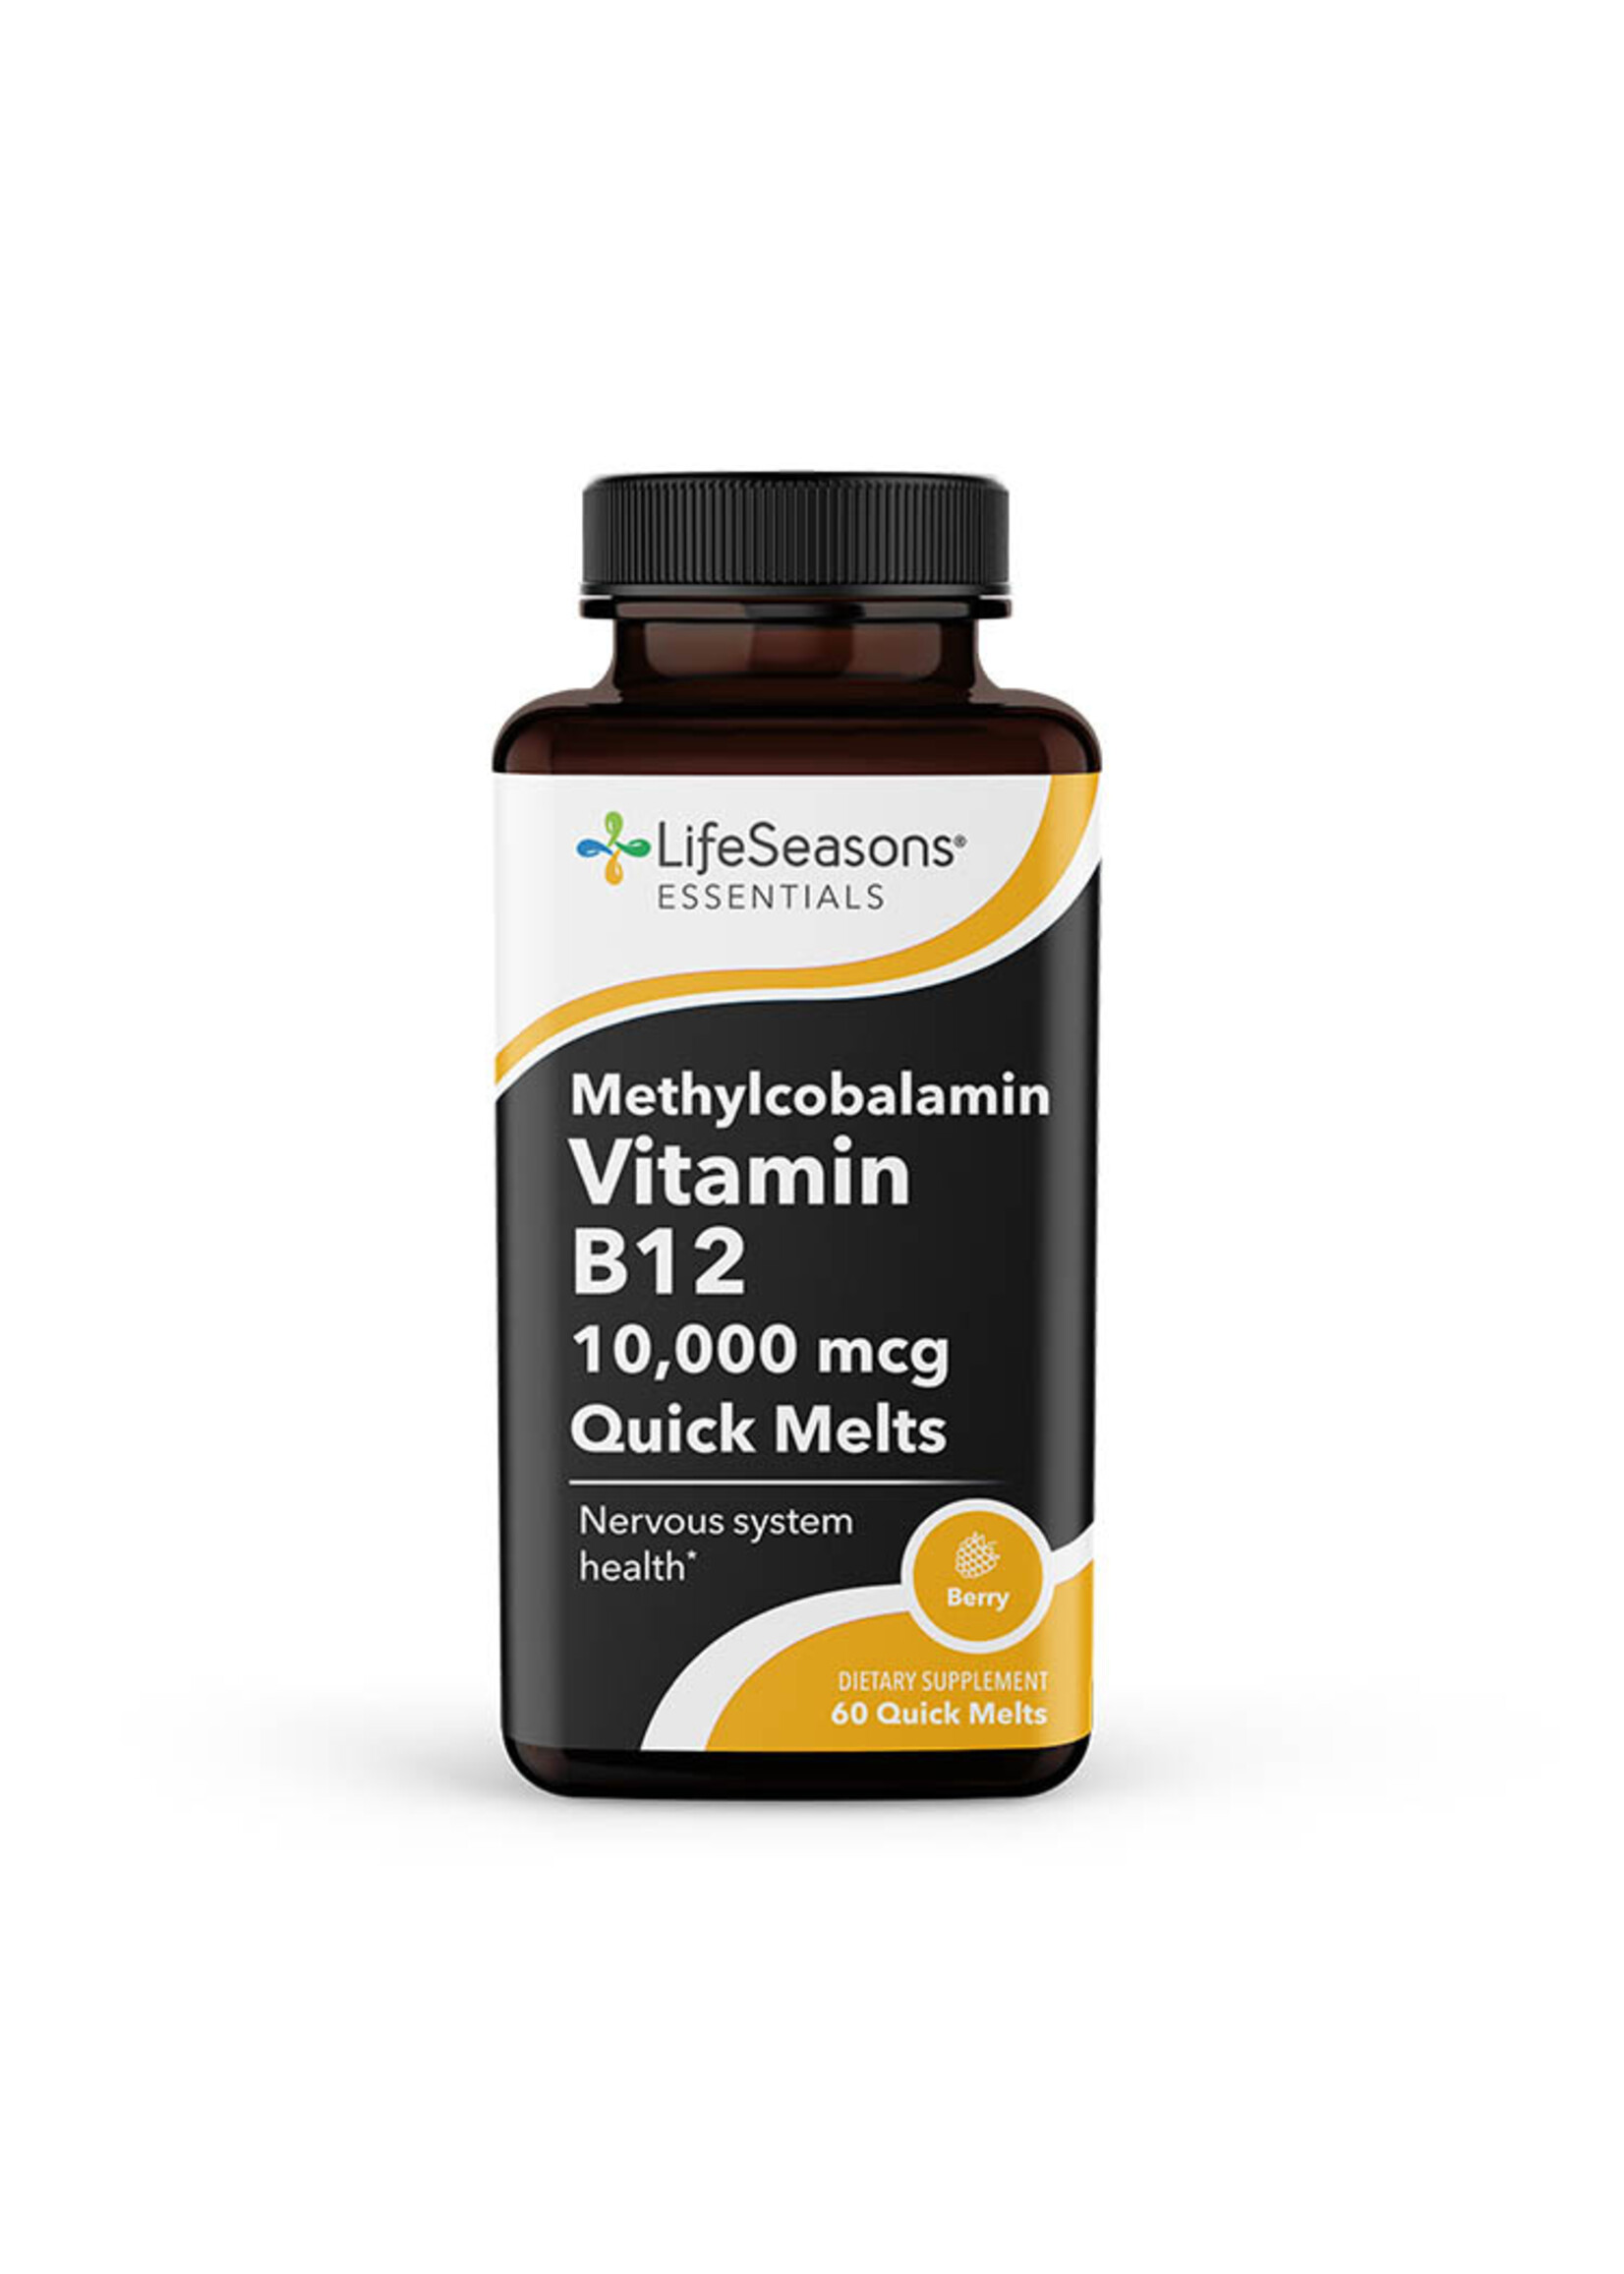 Life Seasons LSE Vitamin B12 Methylcobalamin Quickmelt 60 ct